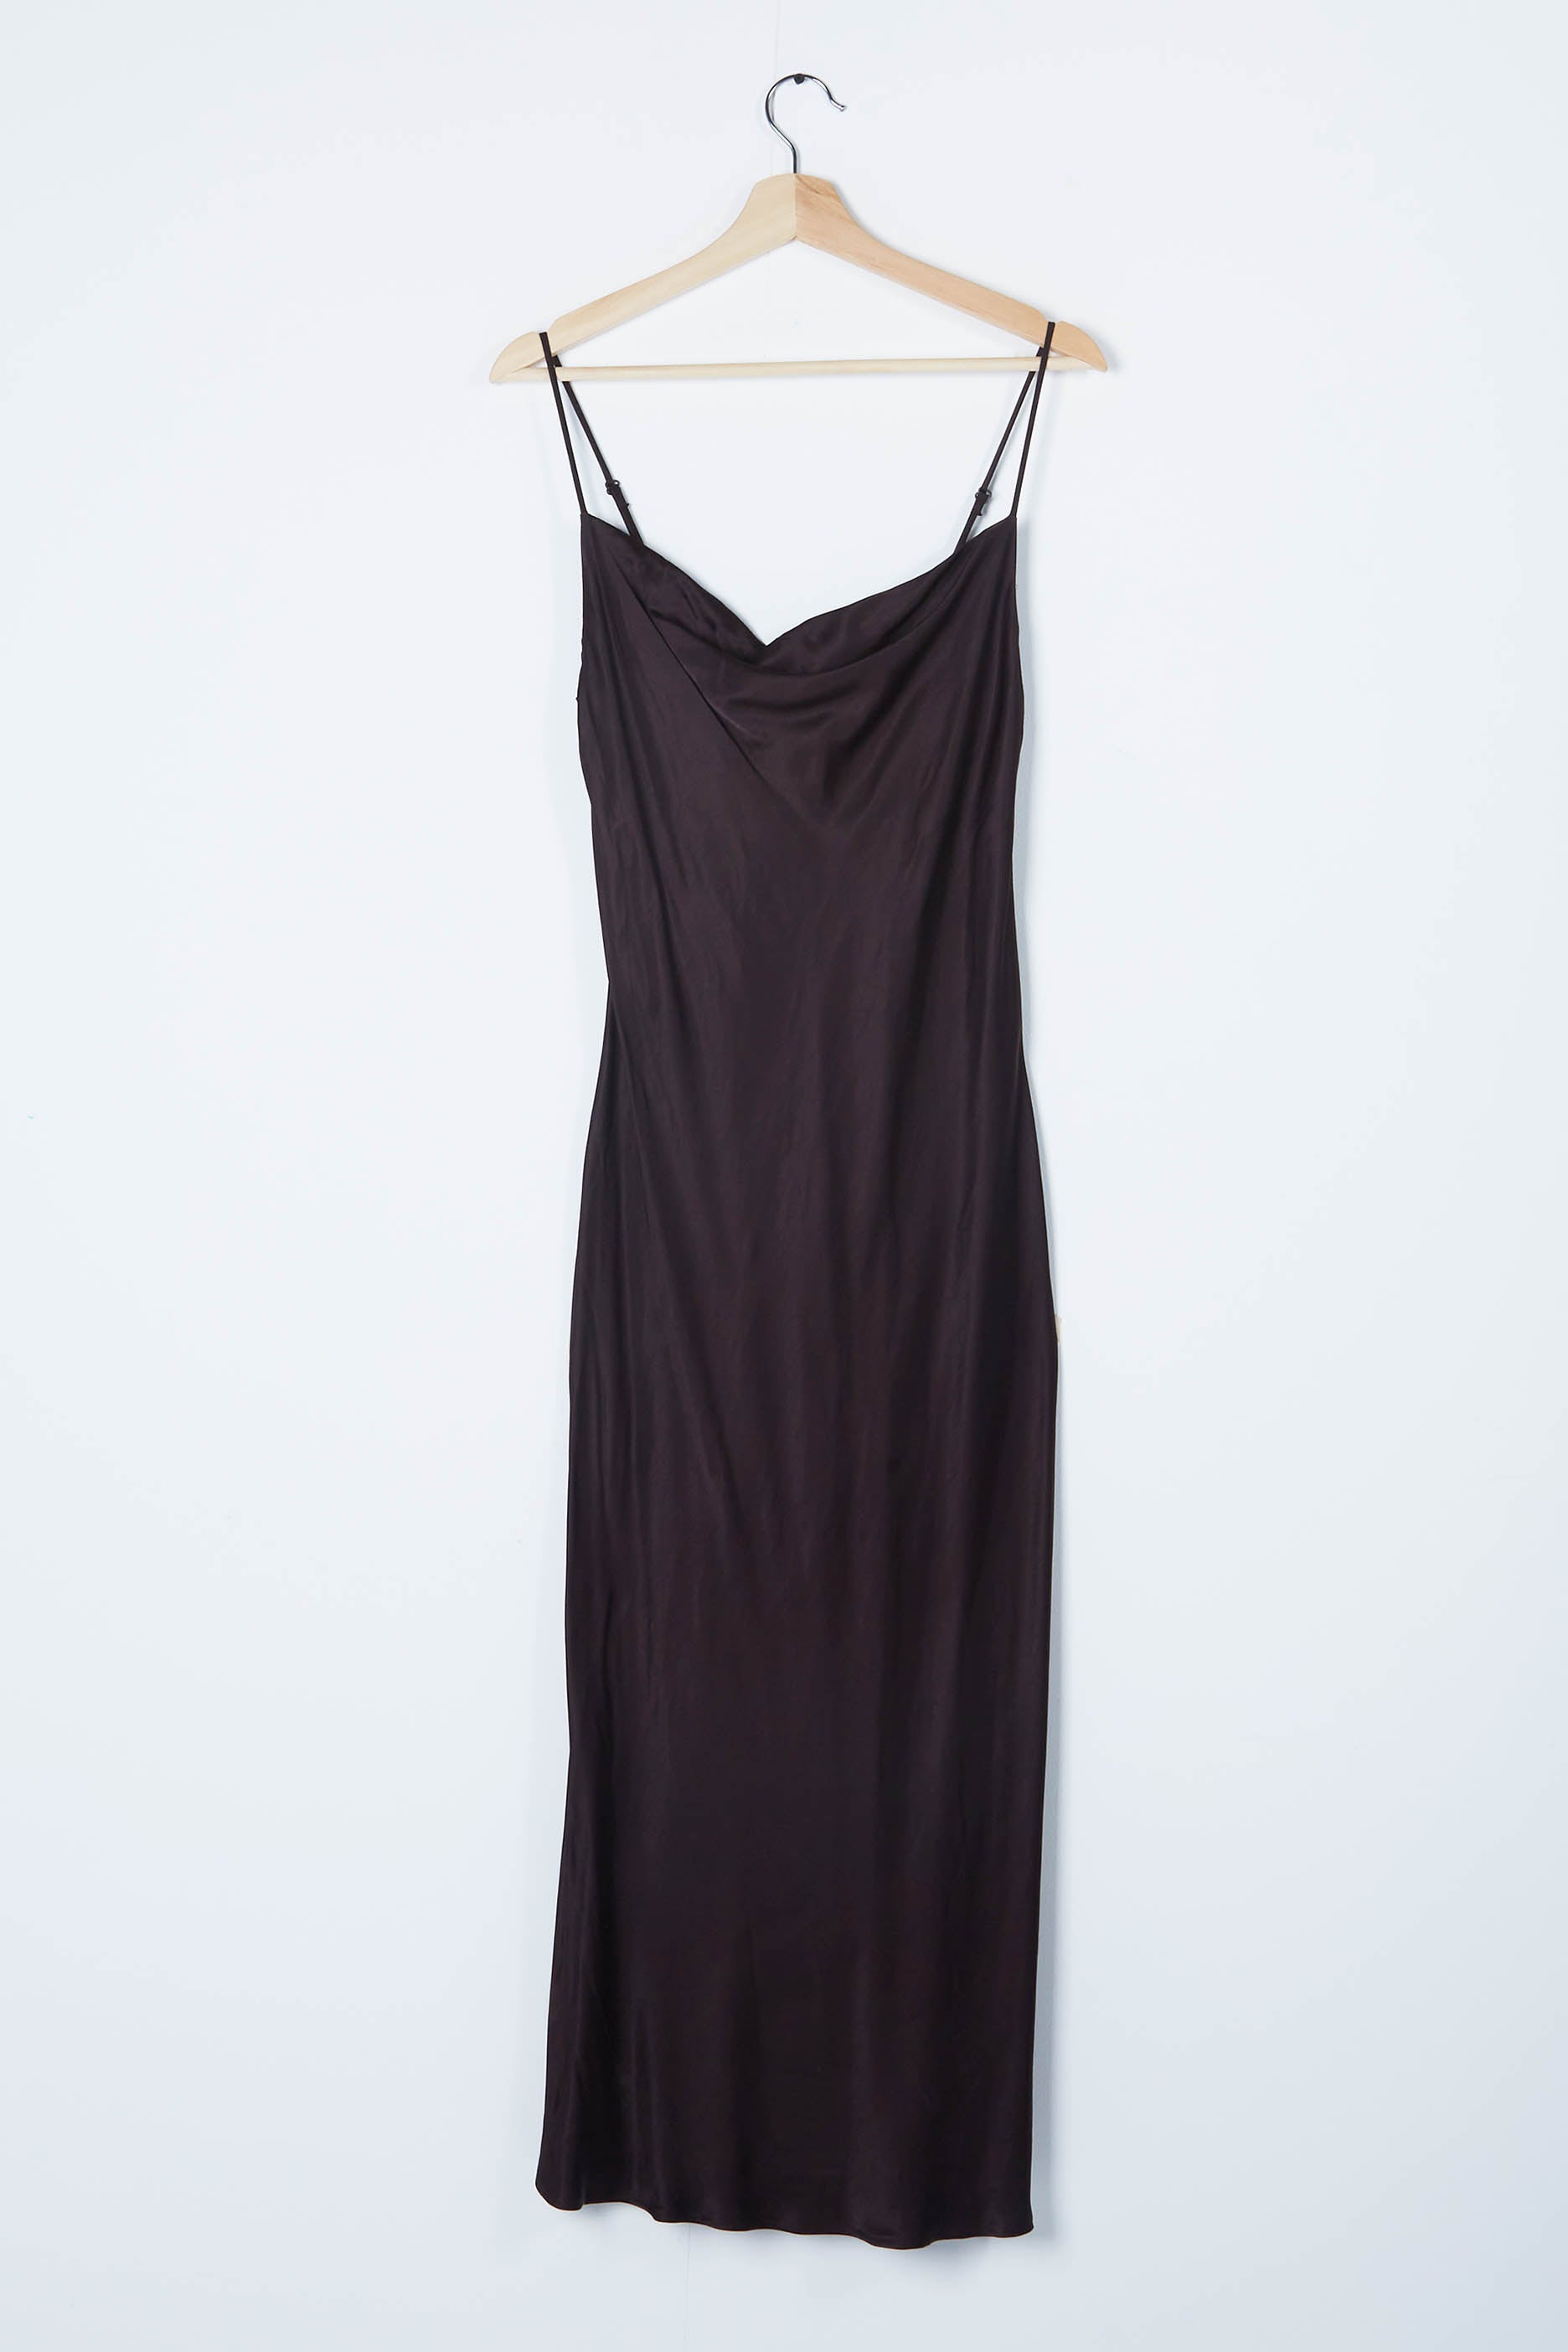 Brown Satin Slip dress (Eu38)